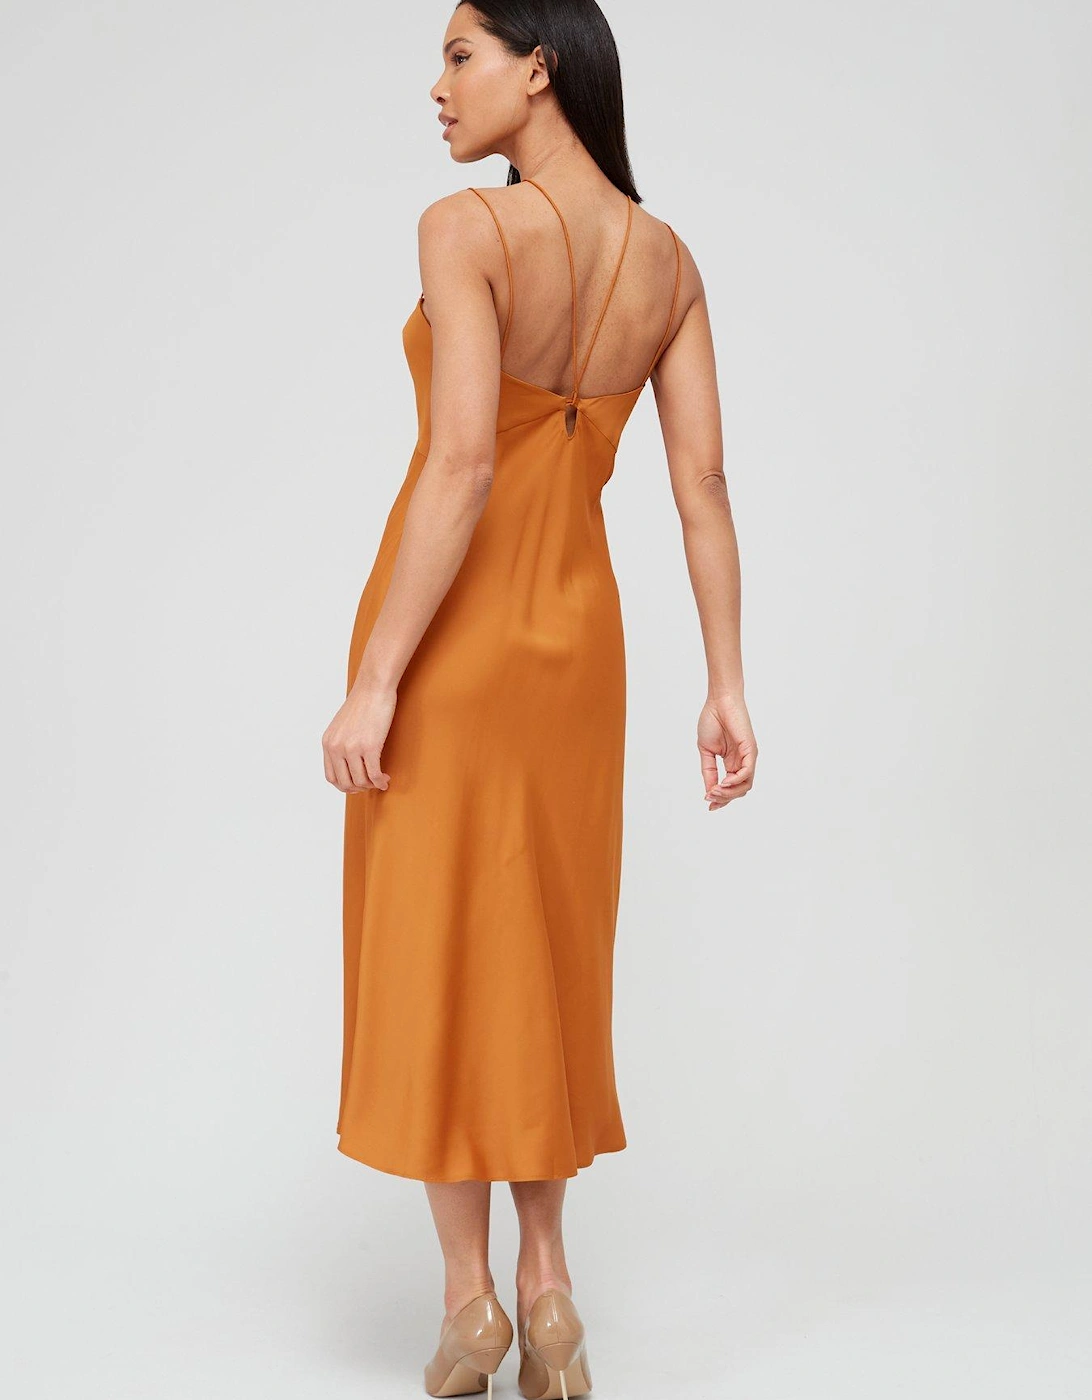 Micro Strap Twist Front Slip Dress - Brown